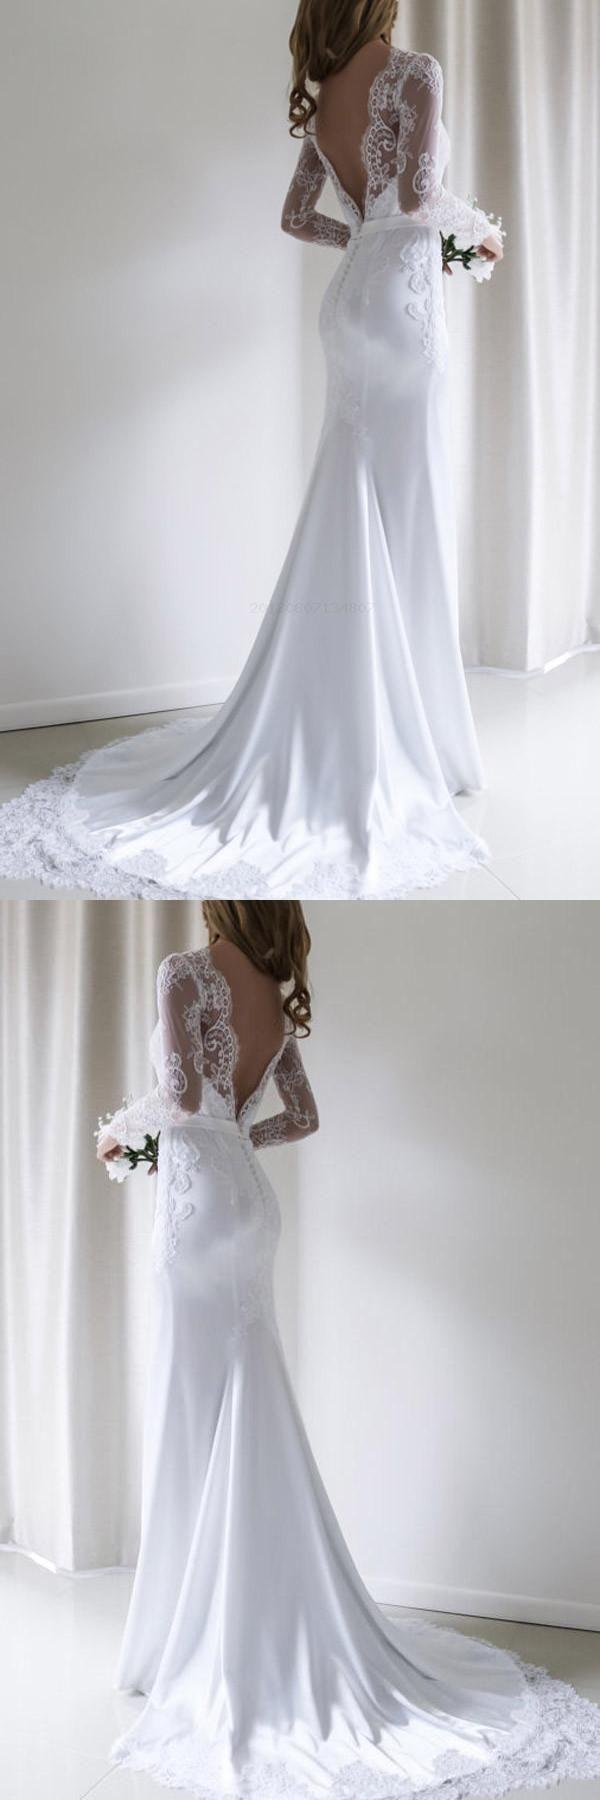 Hochzeit - Hot Sale Admirable Mermaid Wedding Dresses Elegant Lace Long Sleeves Mermaid White Long Wedding Dress With Train